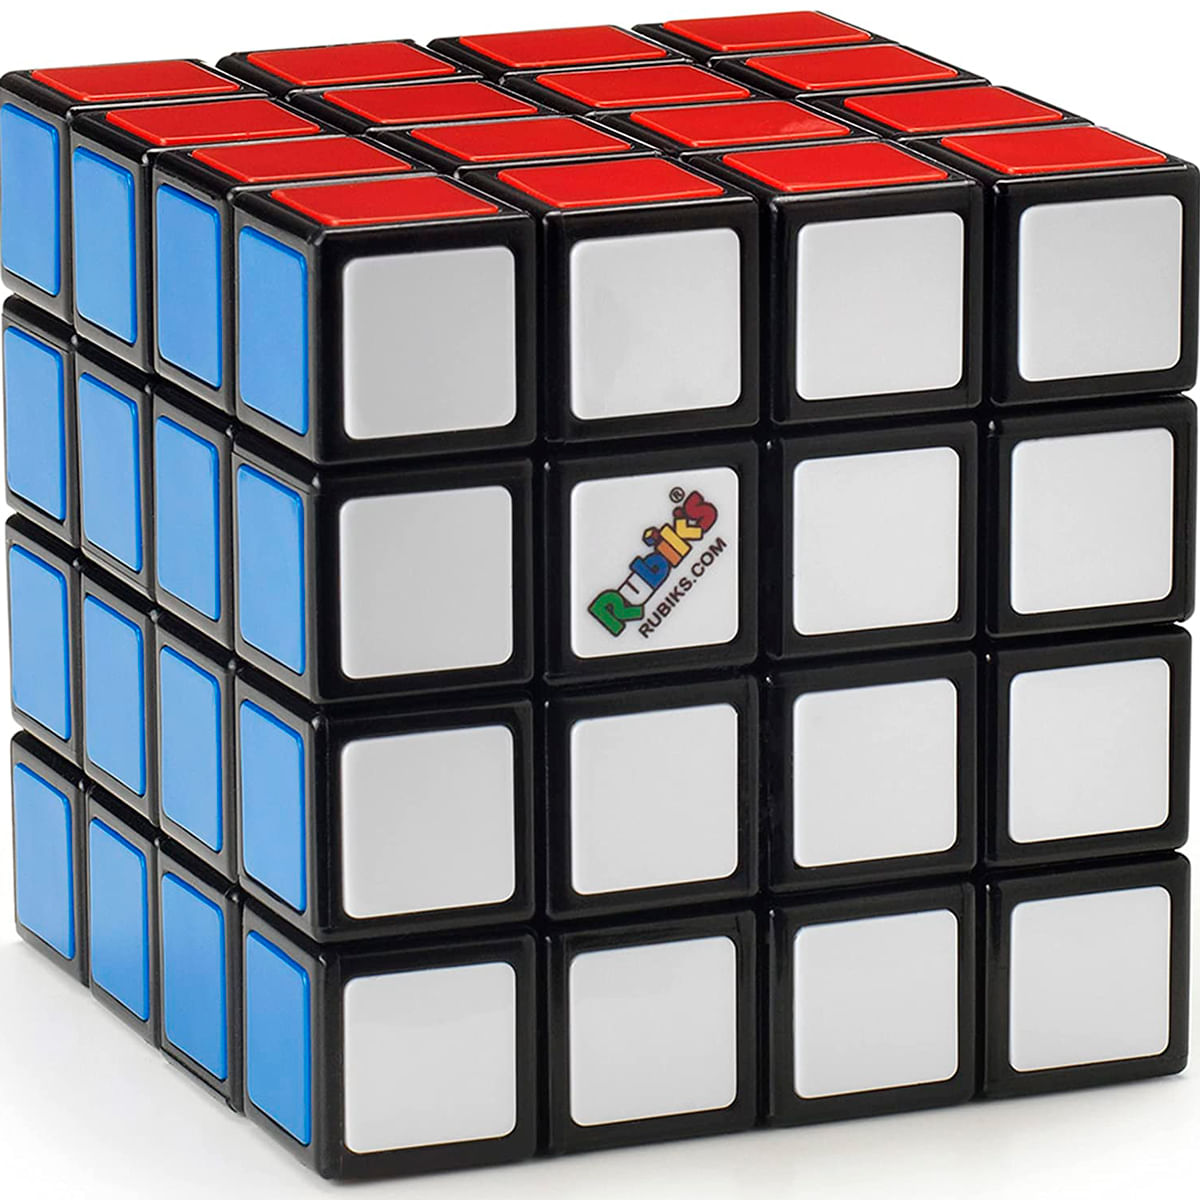 4x4 Cubo De Rubik Rubik's Master Cubo 4x4